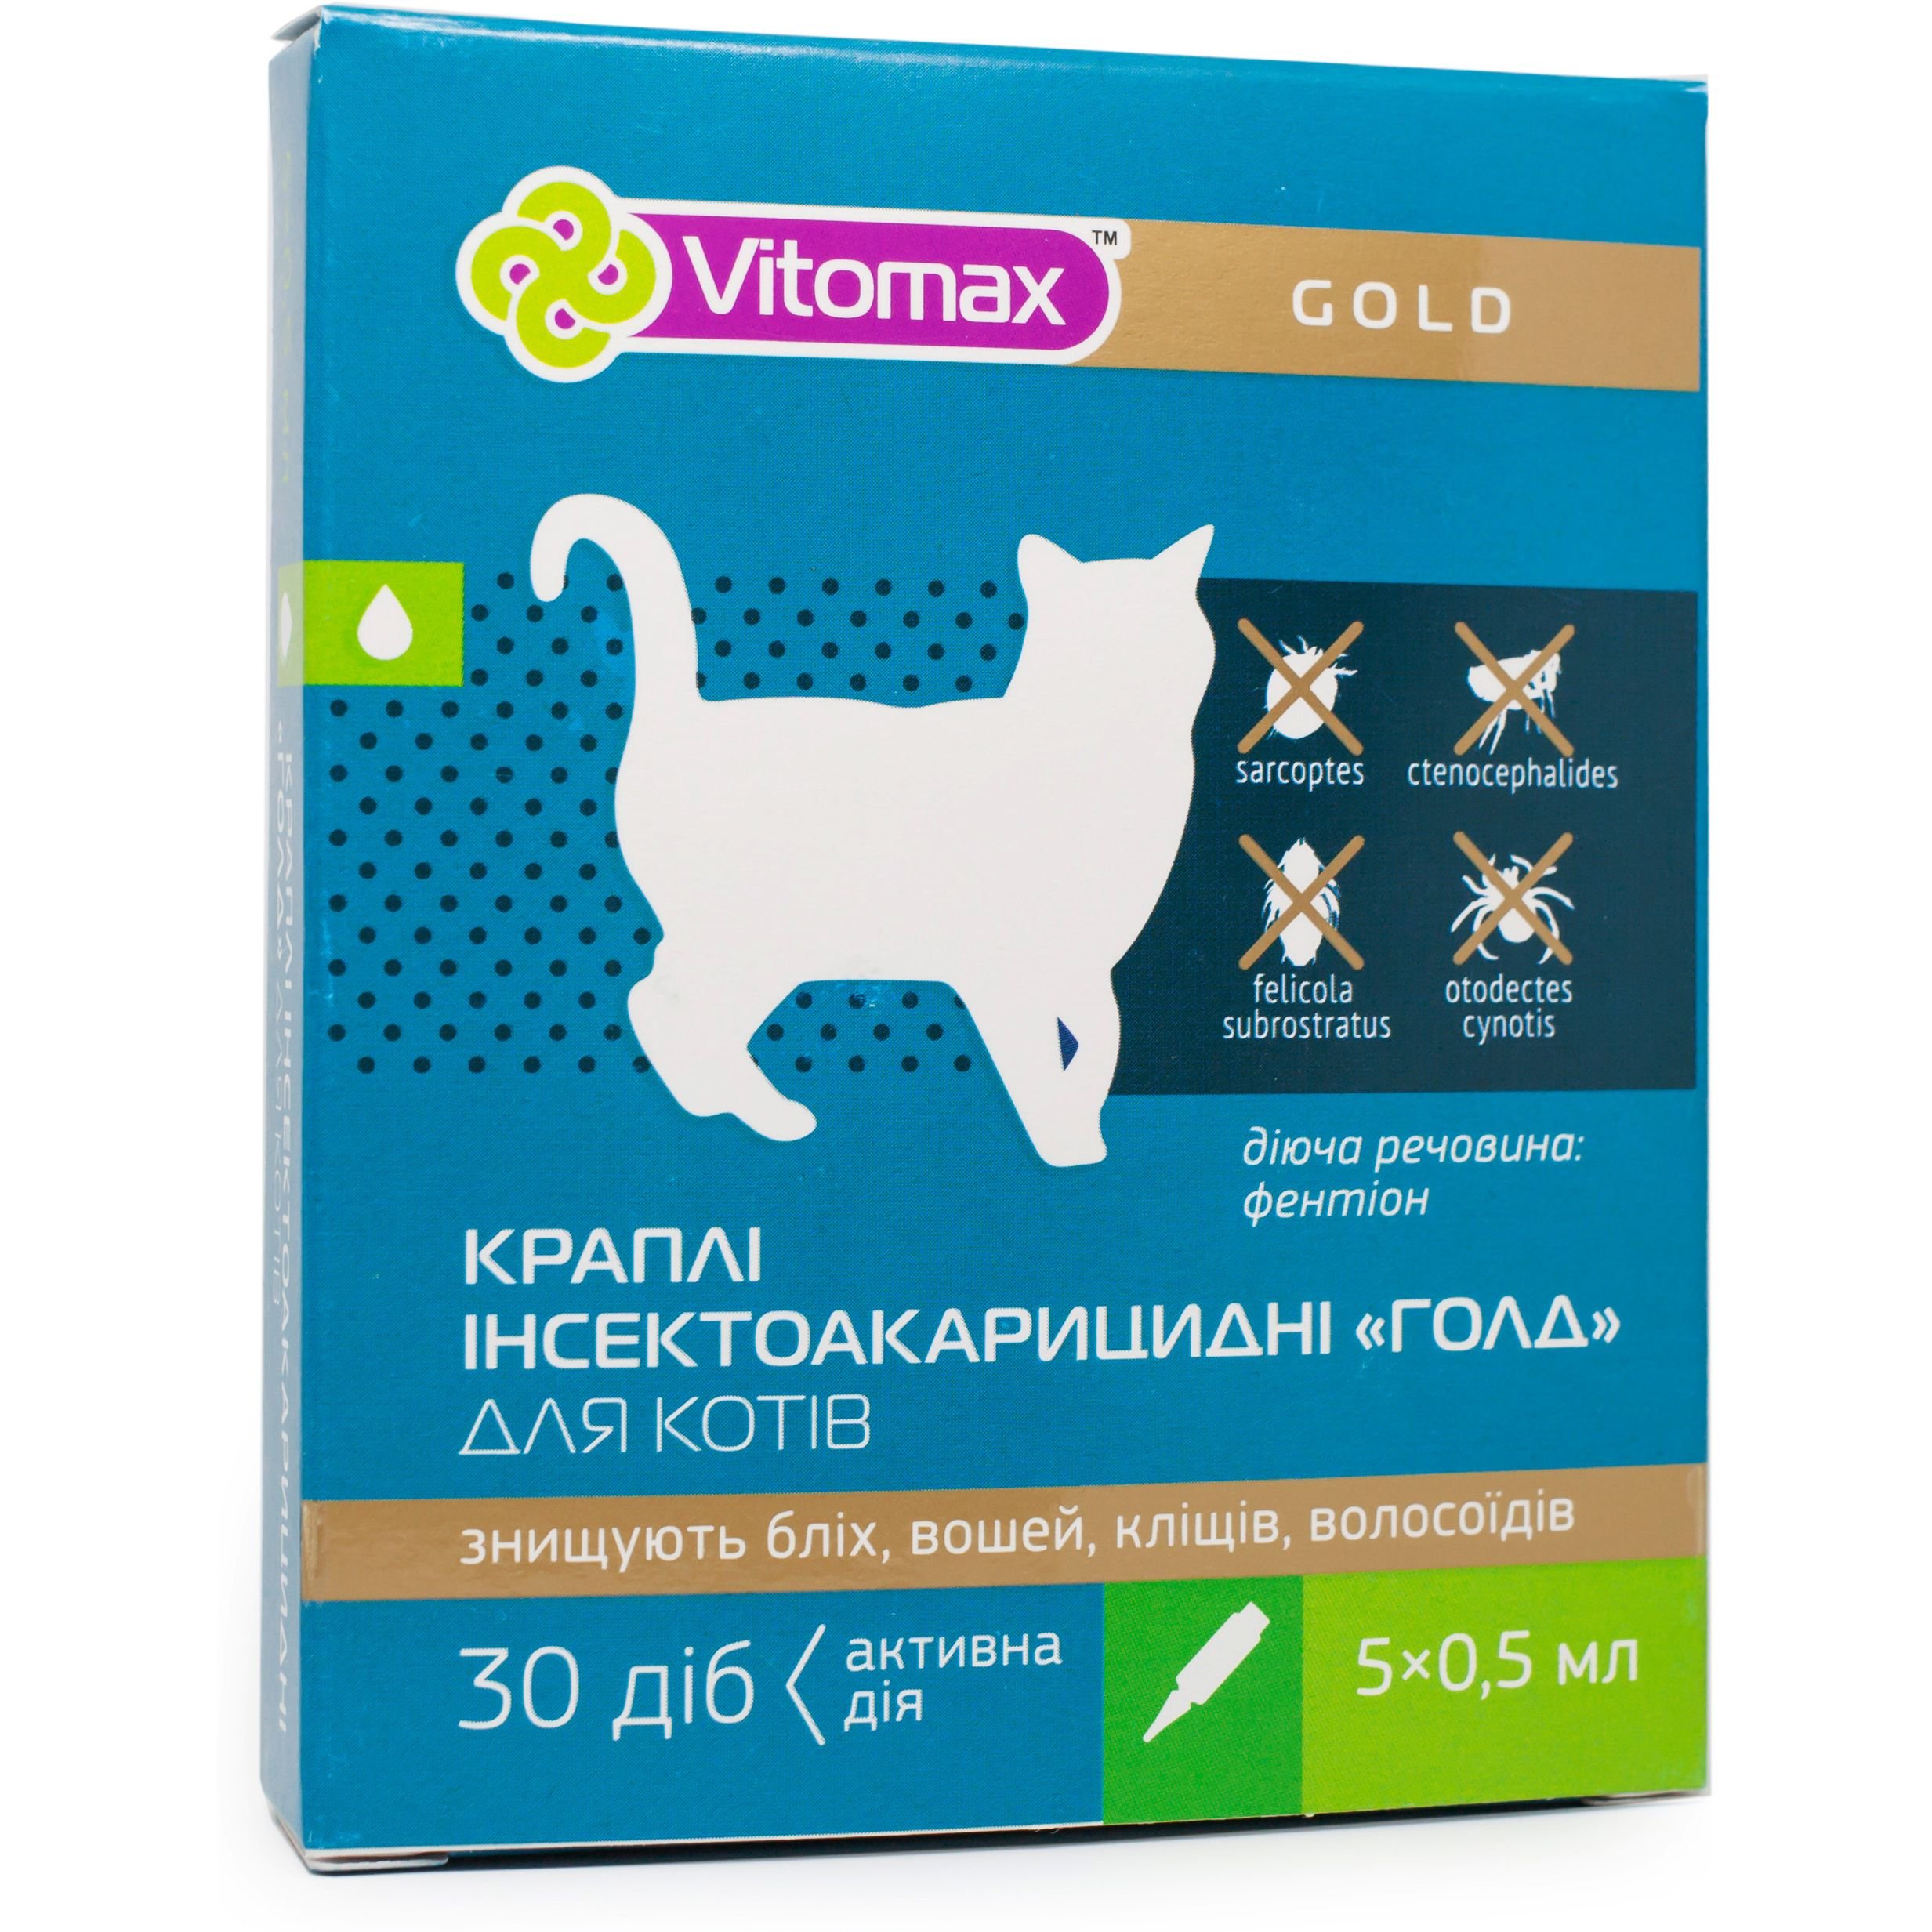 Капли на холку Vitomax Golg противопаразитарные для кошек, 0.5 мл, 5 пипеток - фото 2